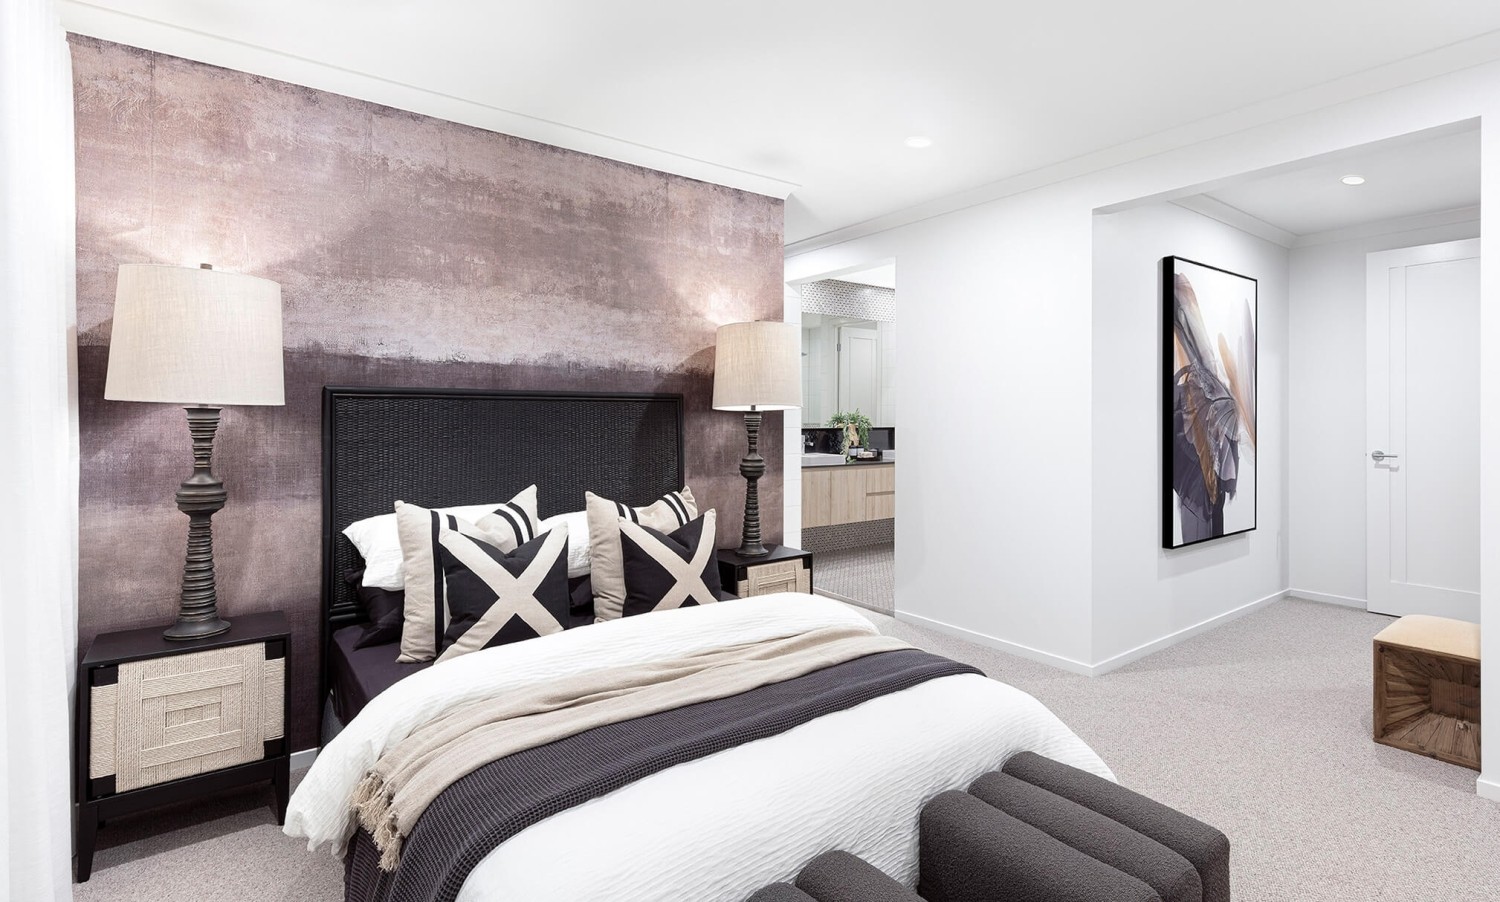 Harvey Double Storey Home Design Master Bedroom